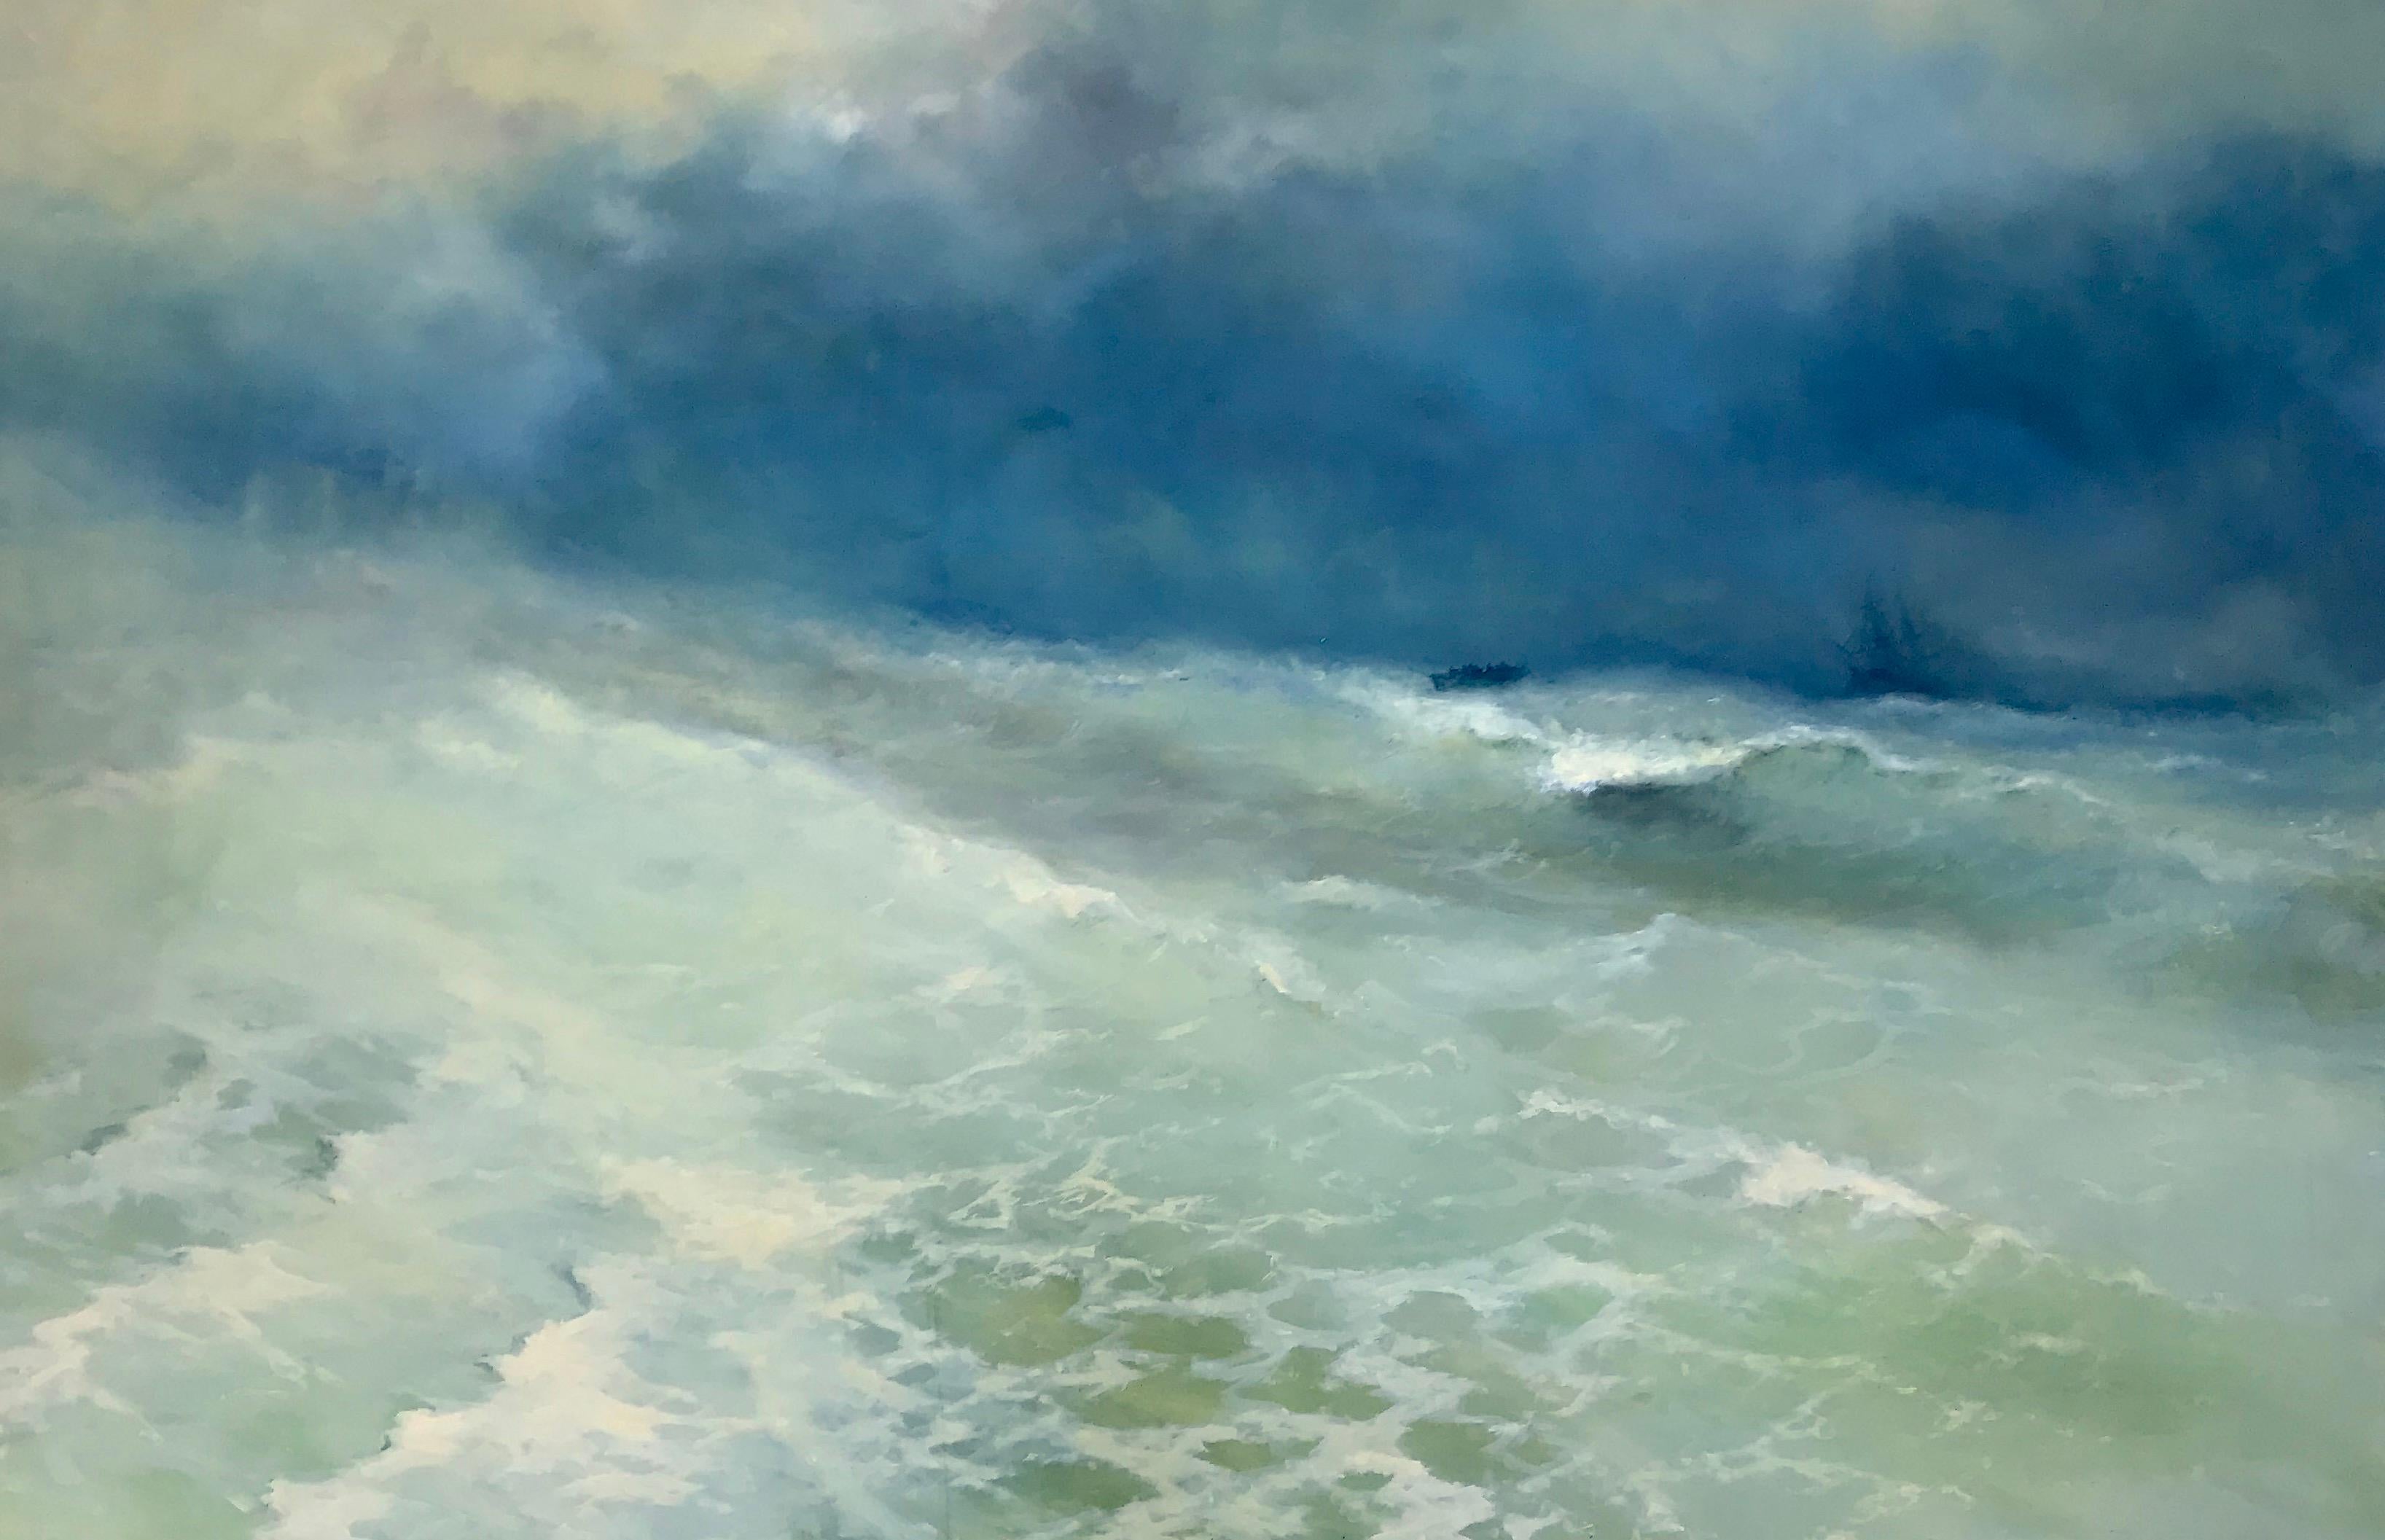 Play of Waves - Painting by Karen Darbinyan